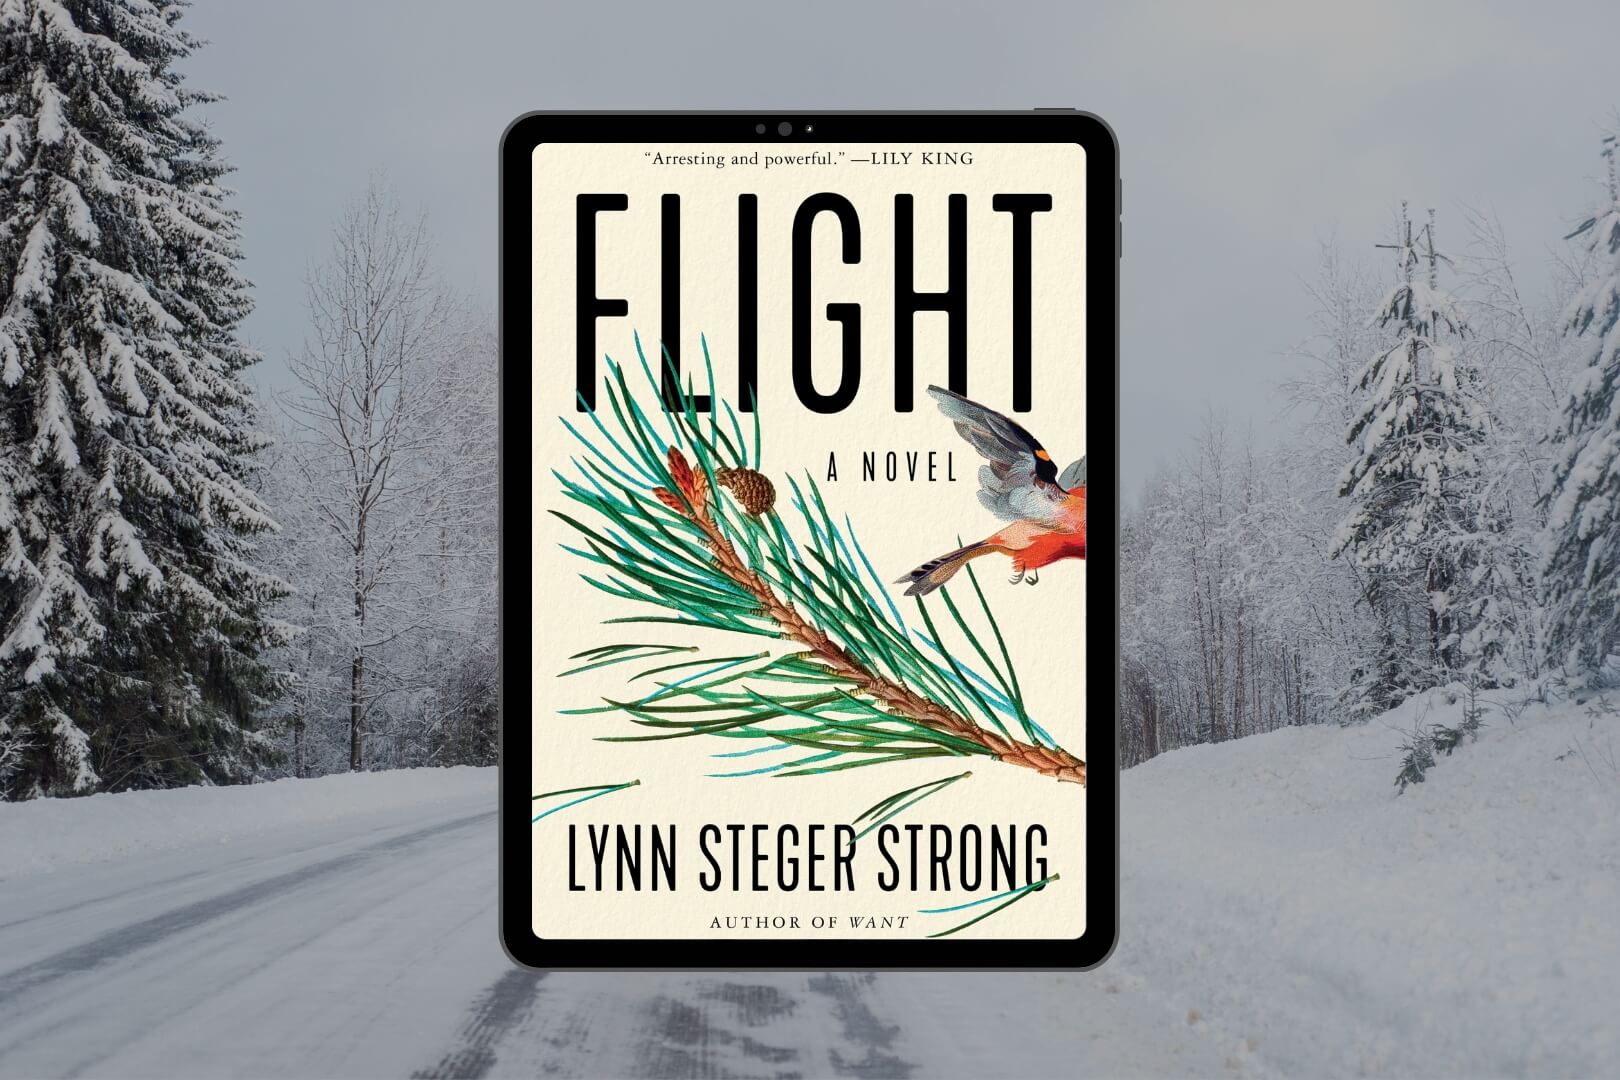 Review: Flight by Lynn Steger Strong